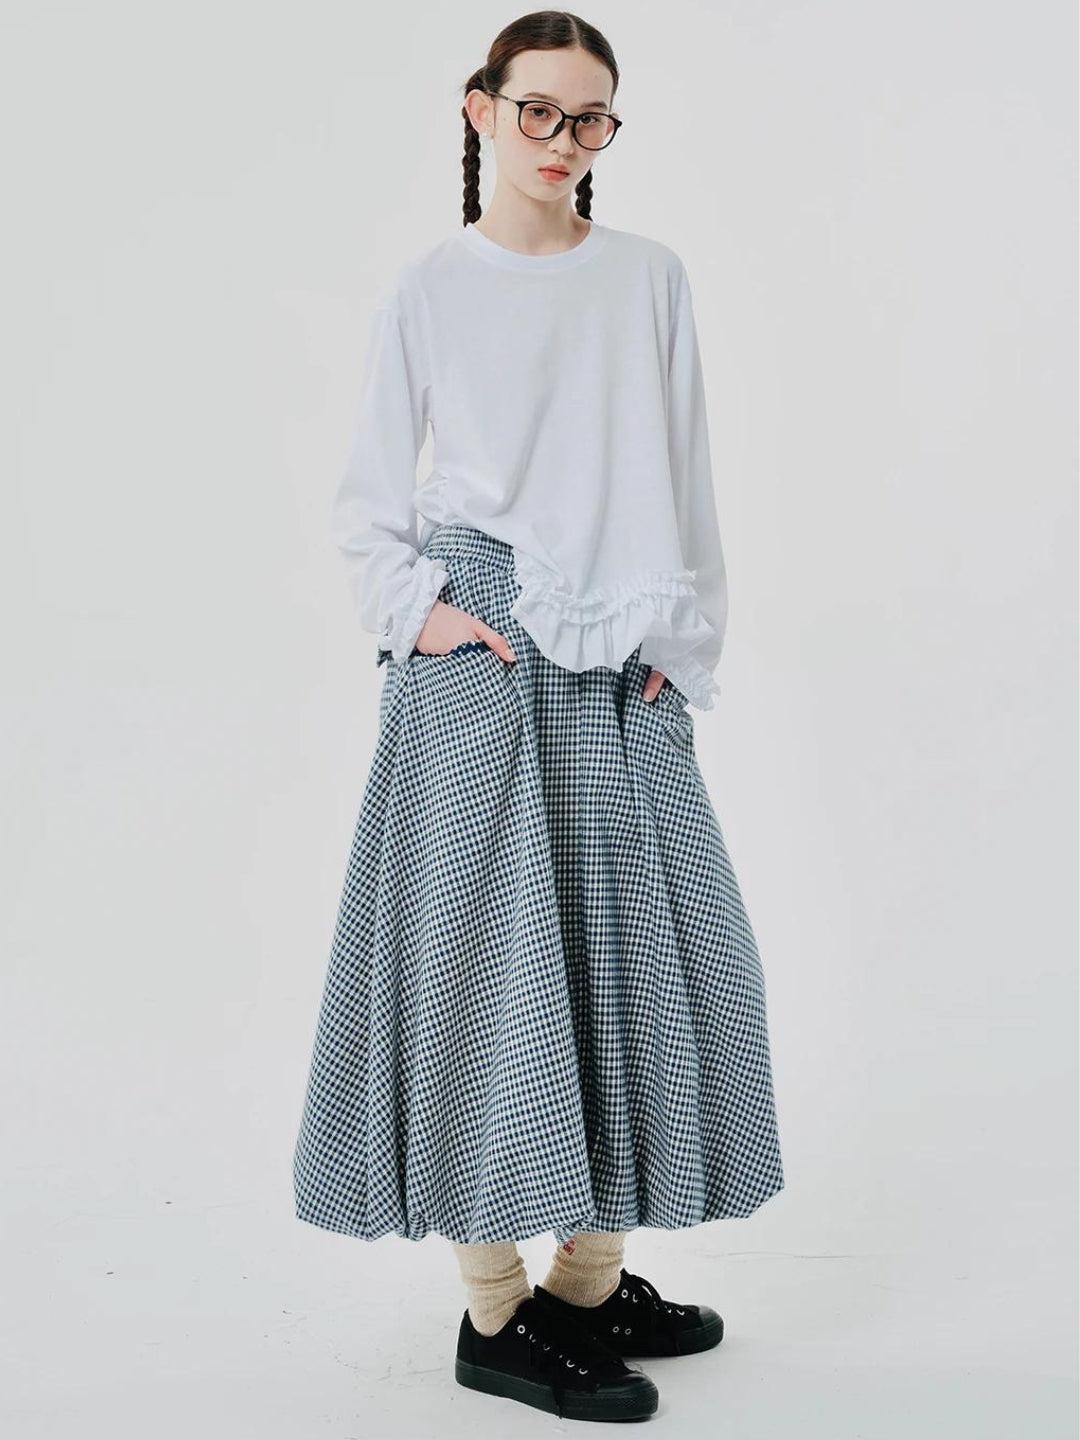 Soft Girl Plaid Bubble Midi Skirt